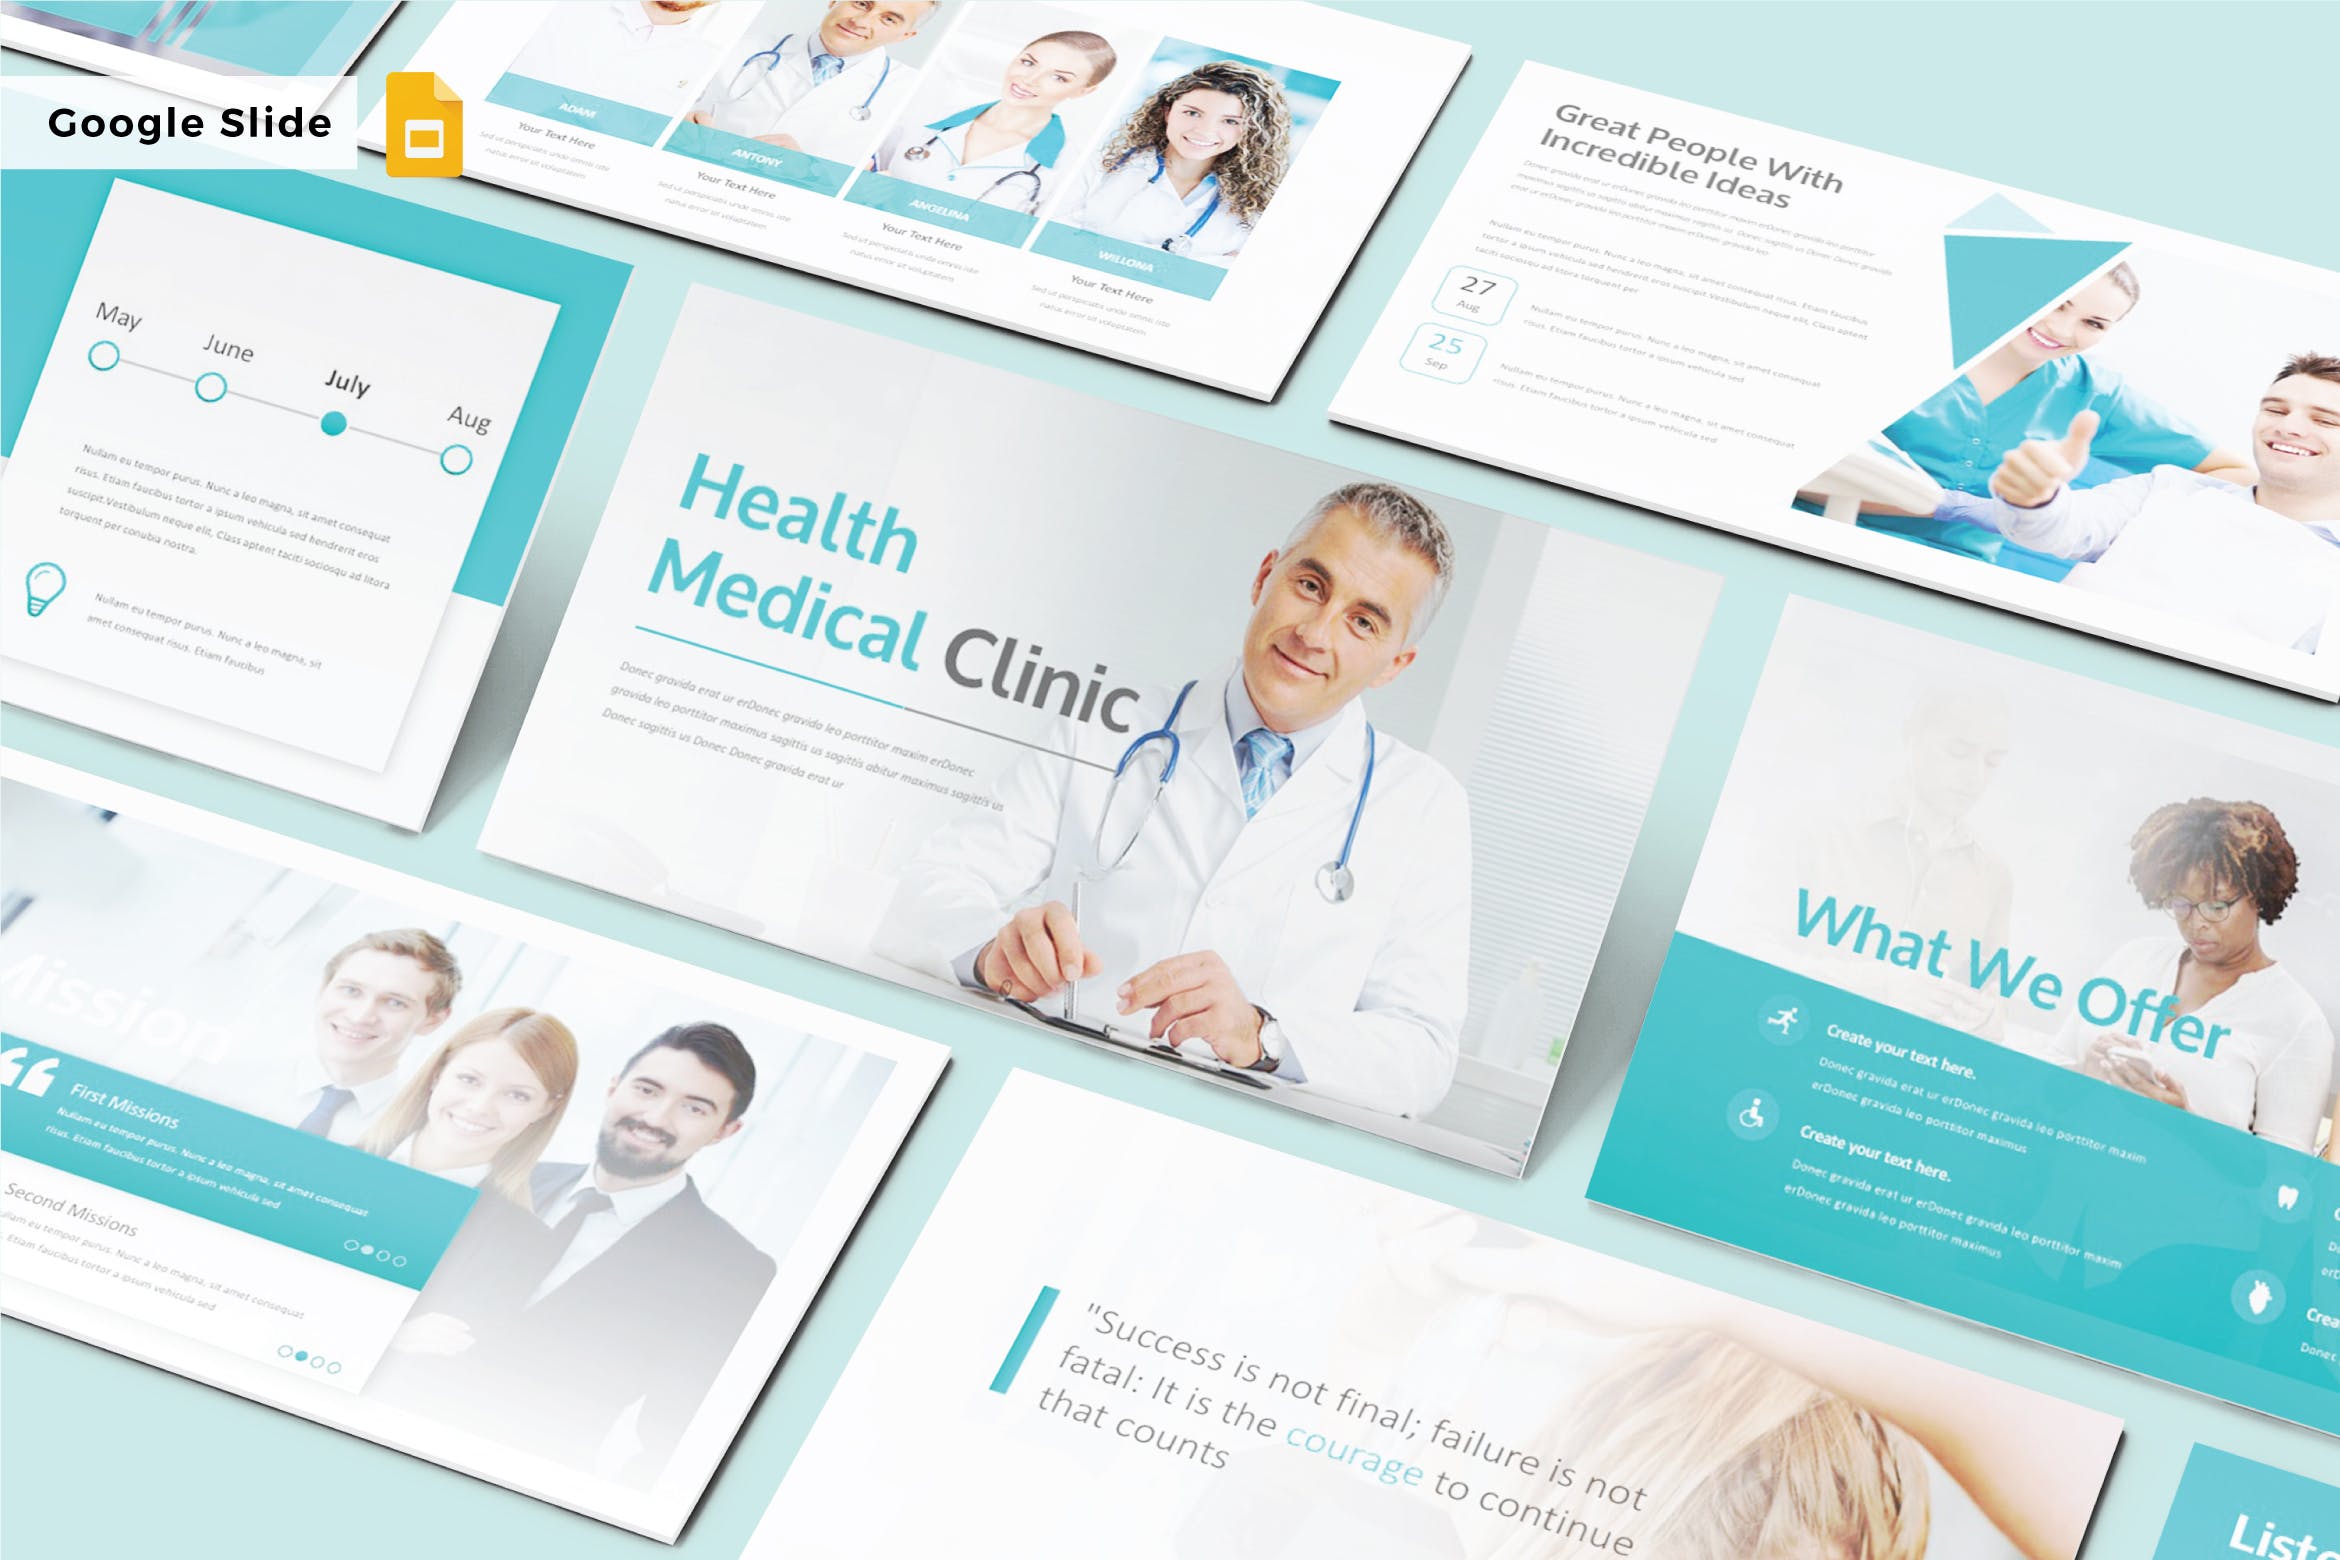 医疗健康主题谷歌幻灯片素材 HEALTH MEDICAL CLINIC – Google Slide Template V255插图